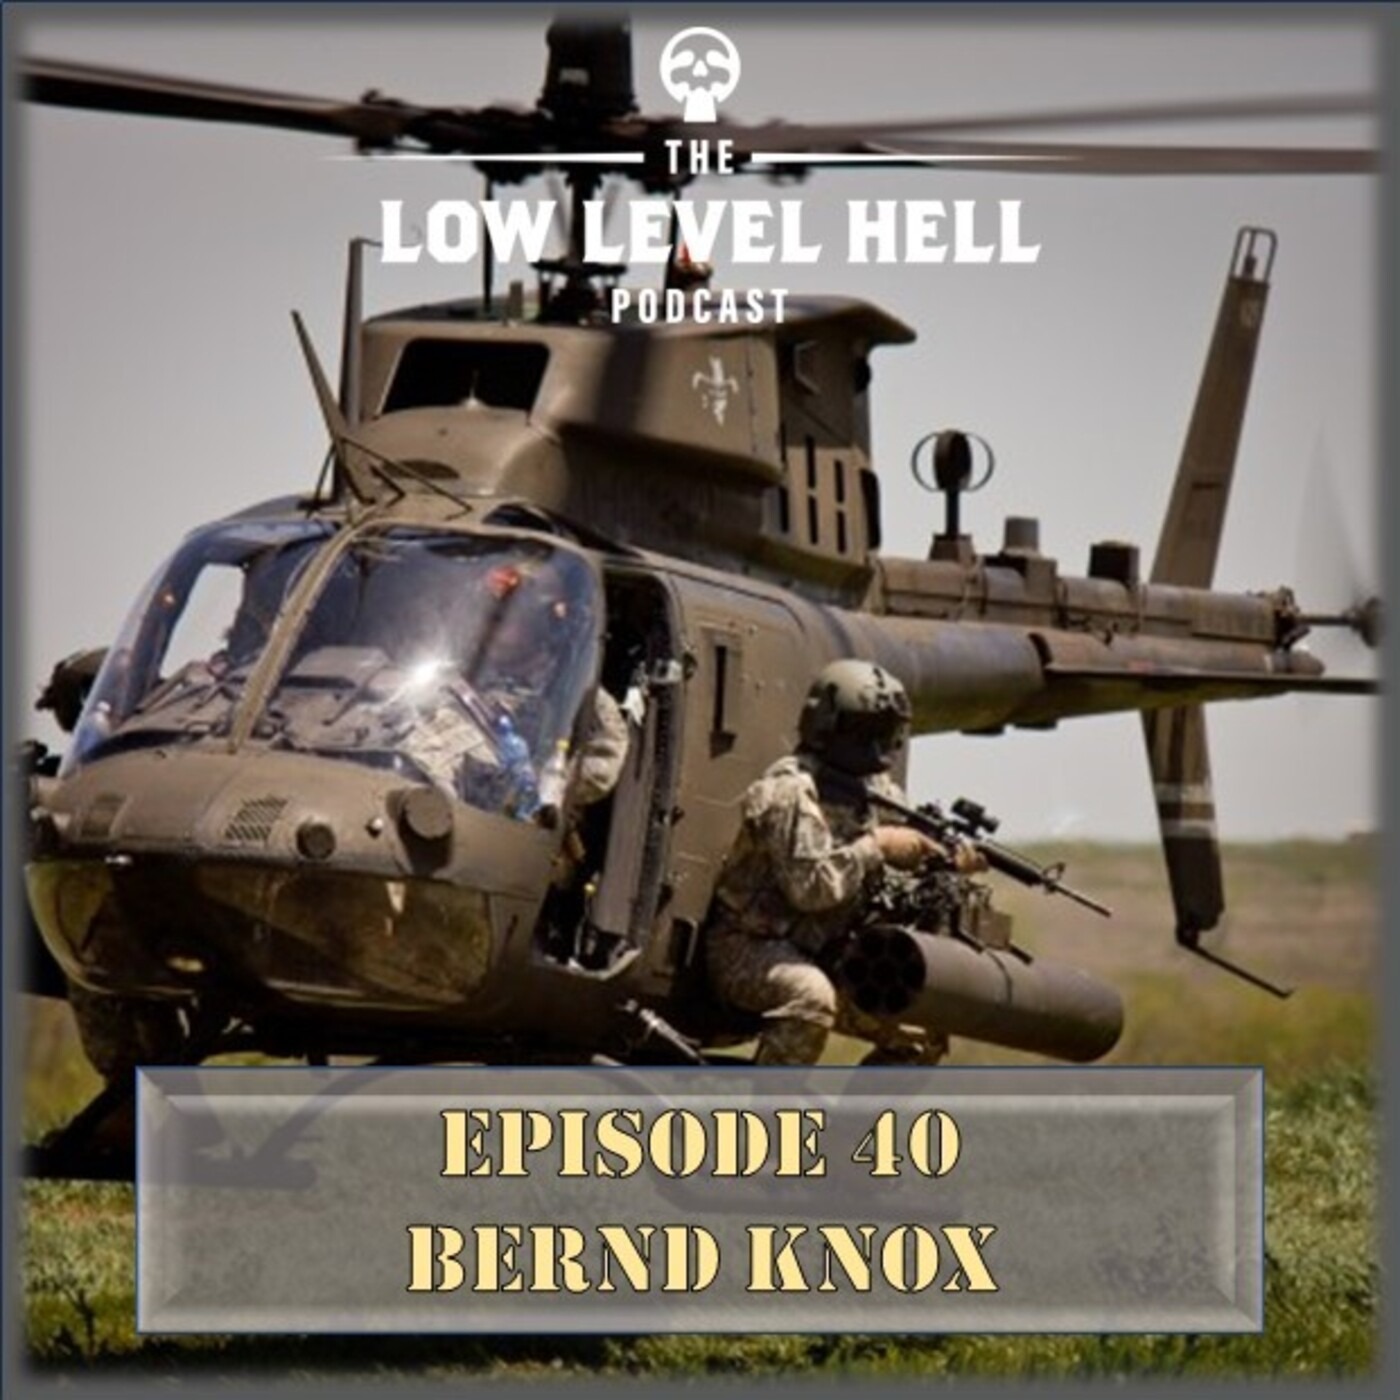 Episode 40: Bernd Knox, OH-58D/ AH-64D